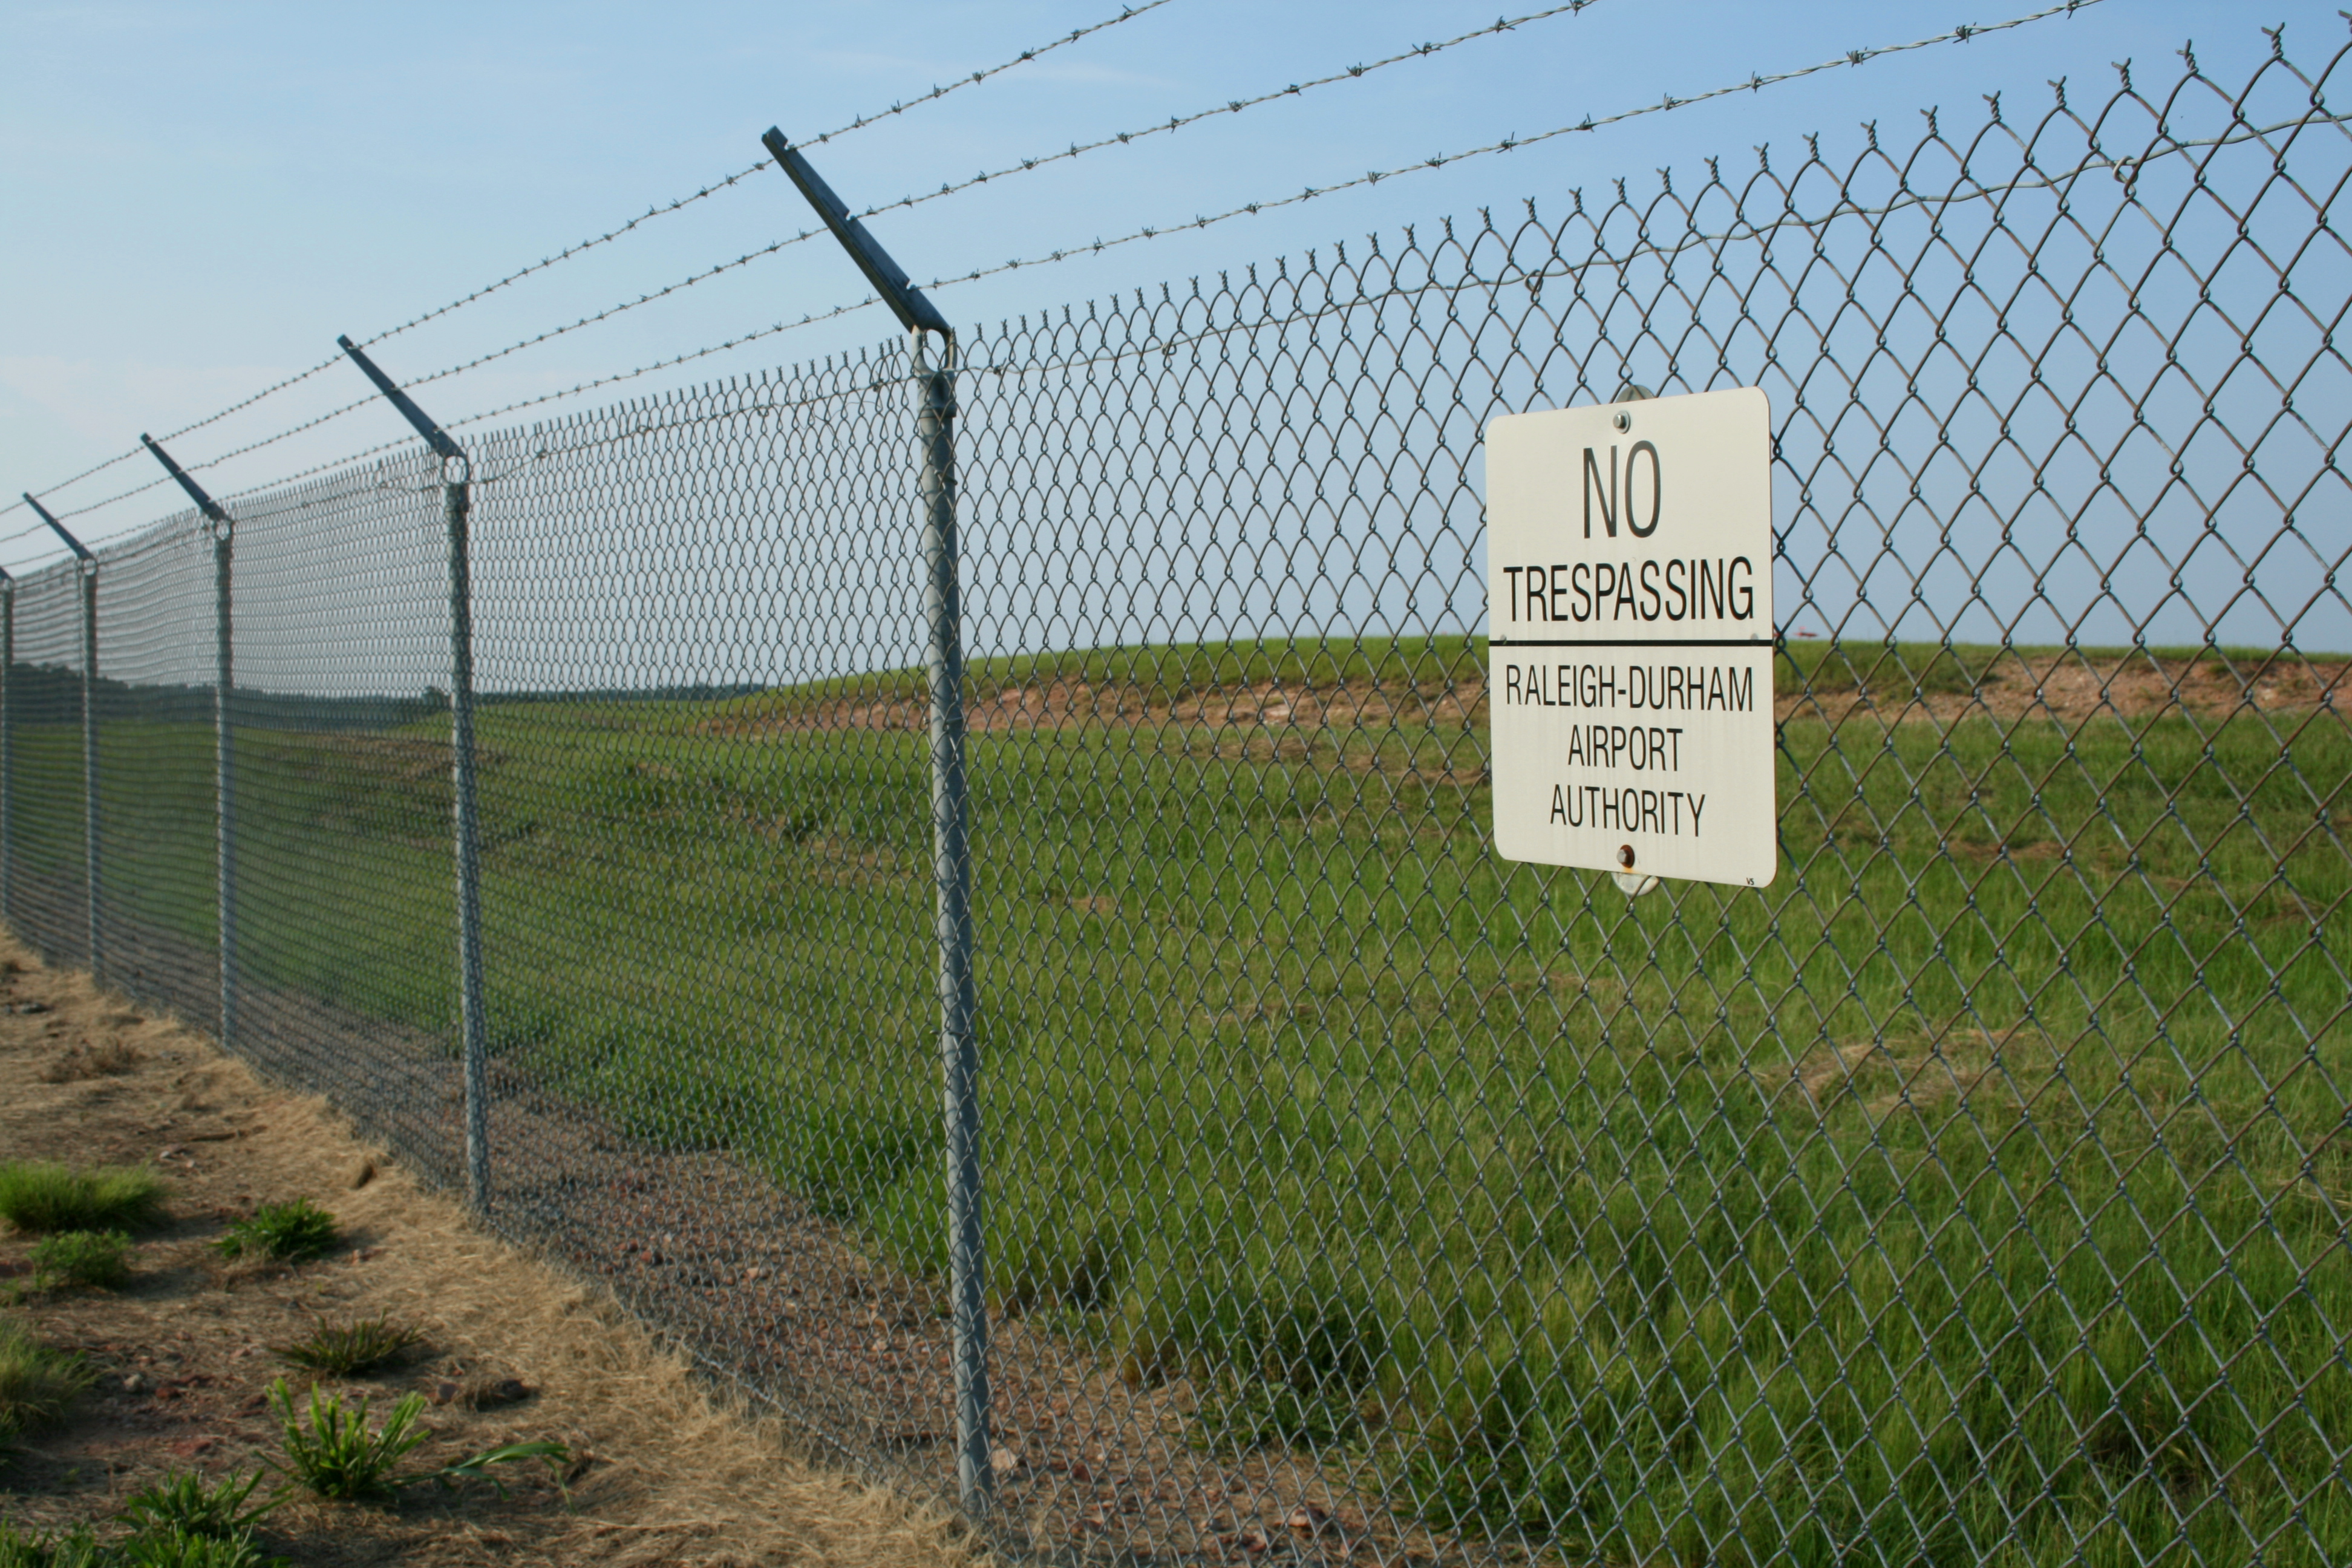 File:2008-08-01 No Tresspassing sign at RDU.jpg - Wikimedia Commons